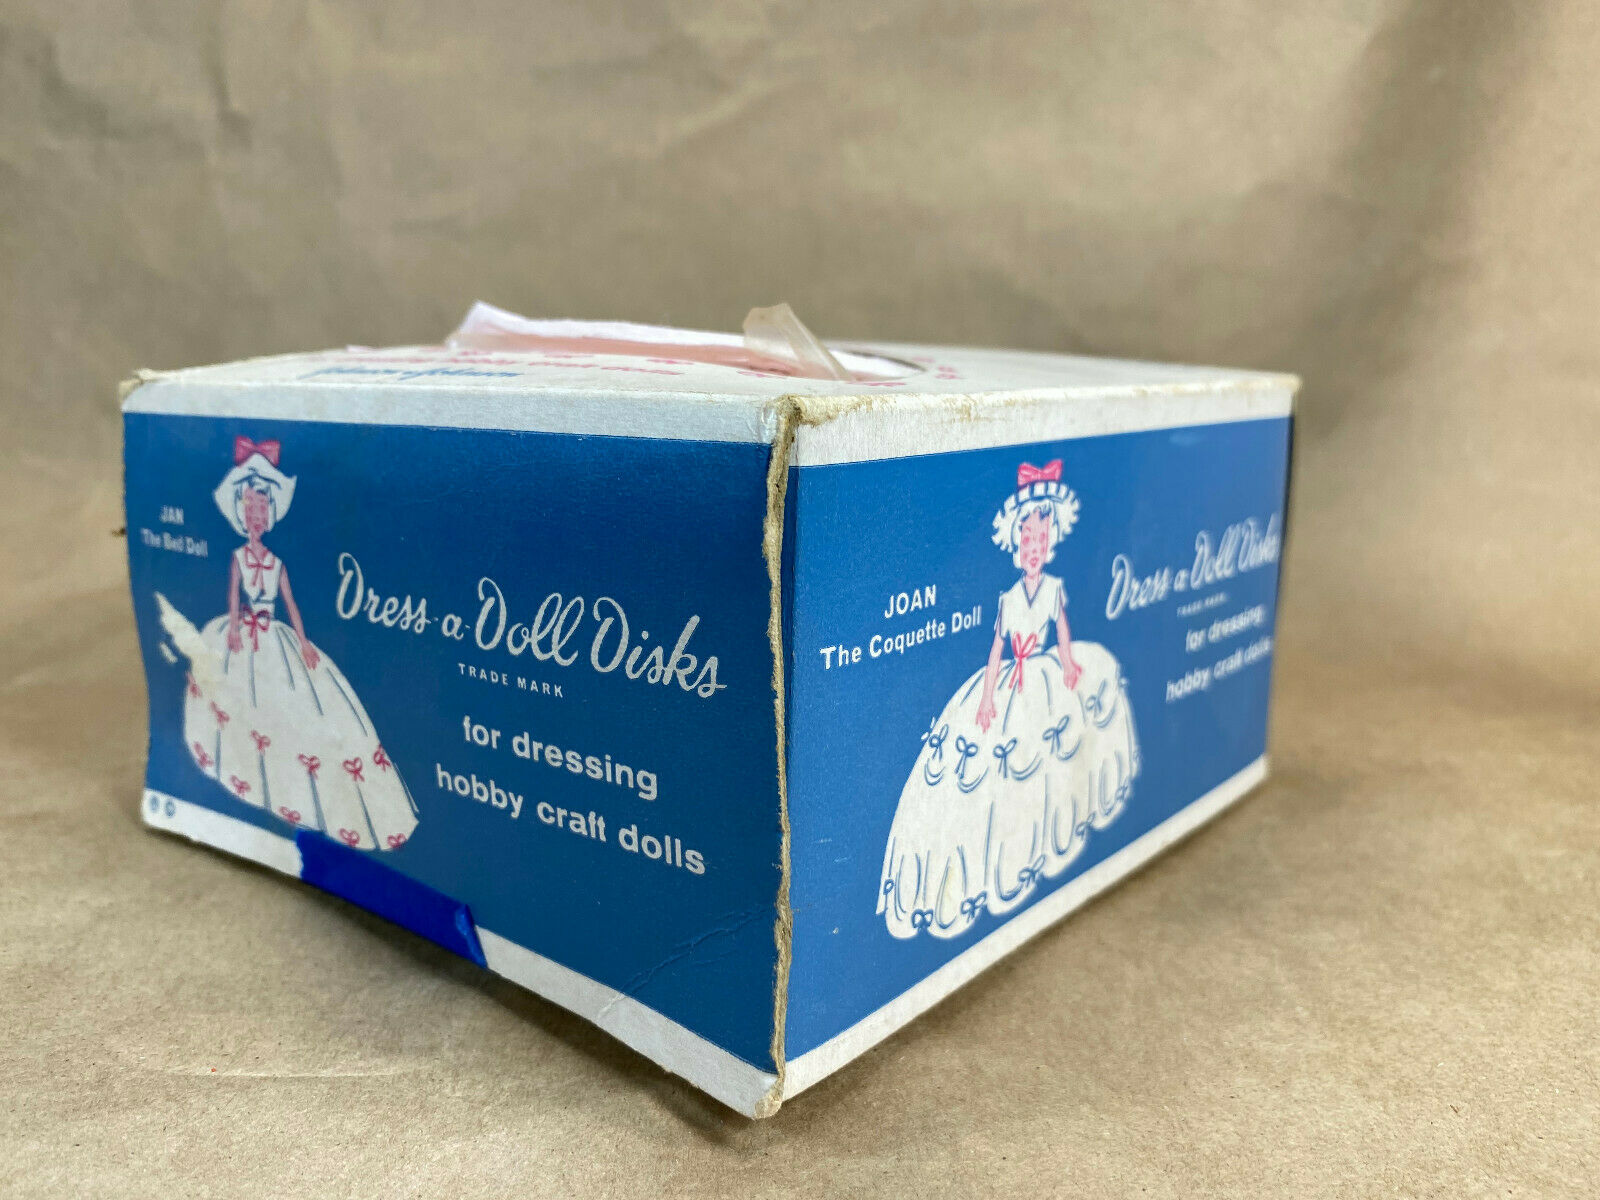 Vintage Johnson & Johnson Dress-a-Doll Disks for dressing hobby craft dolls